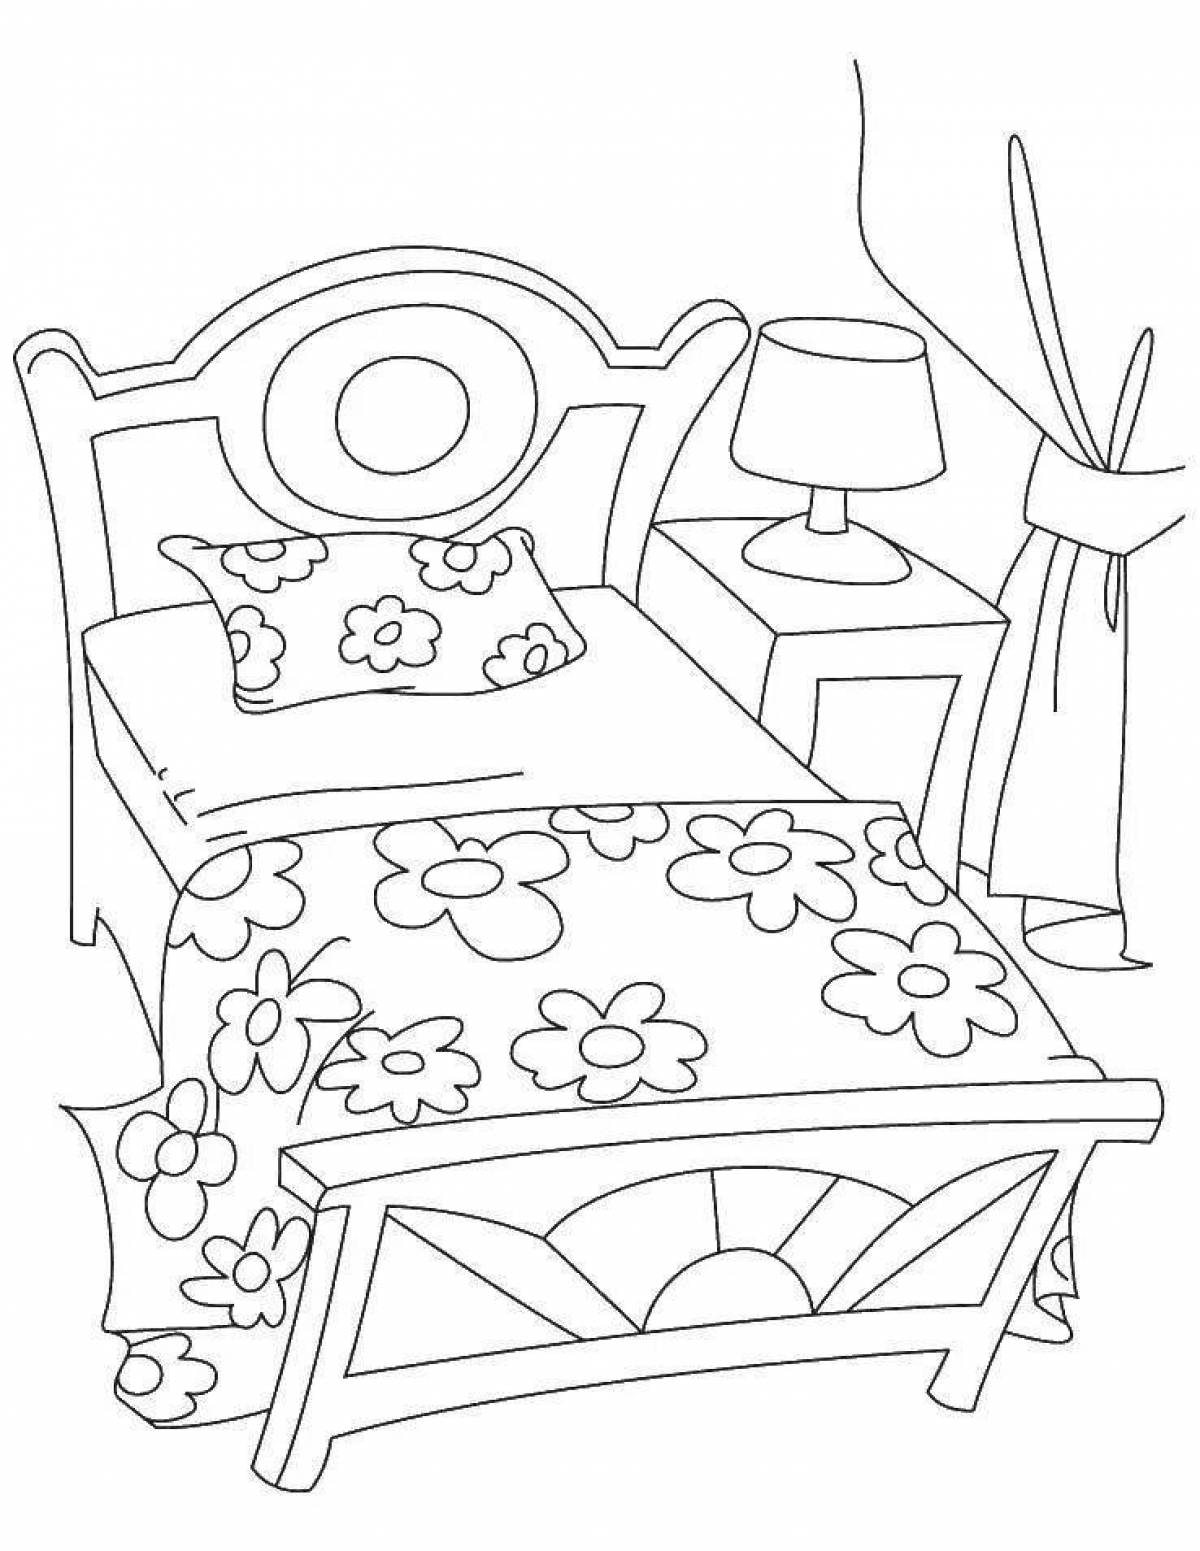 Детская спальня color-explosion coloring page